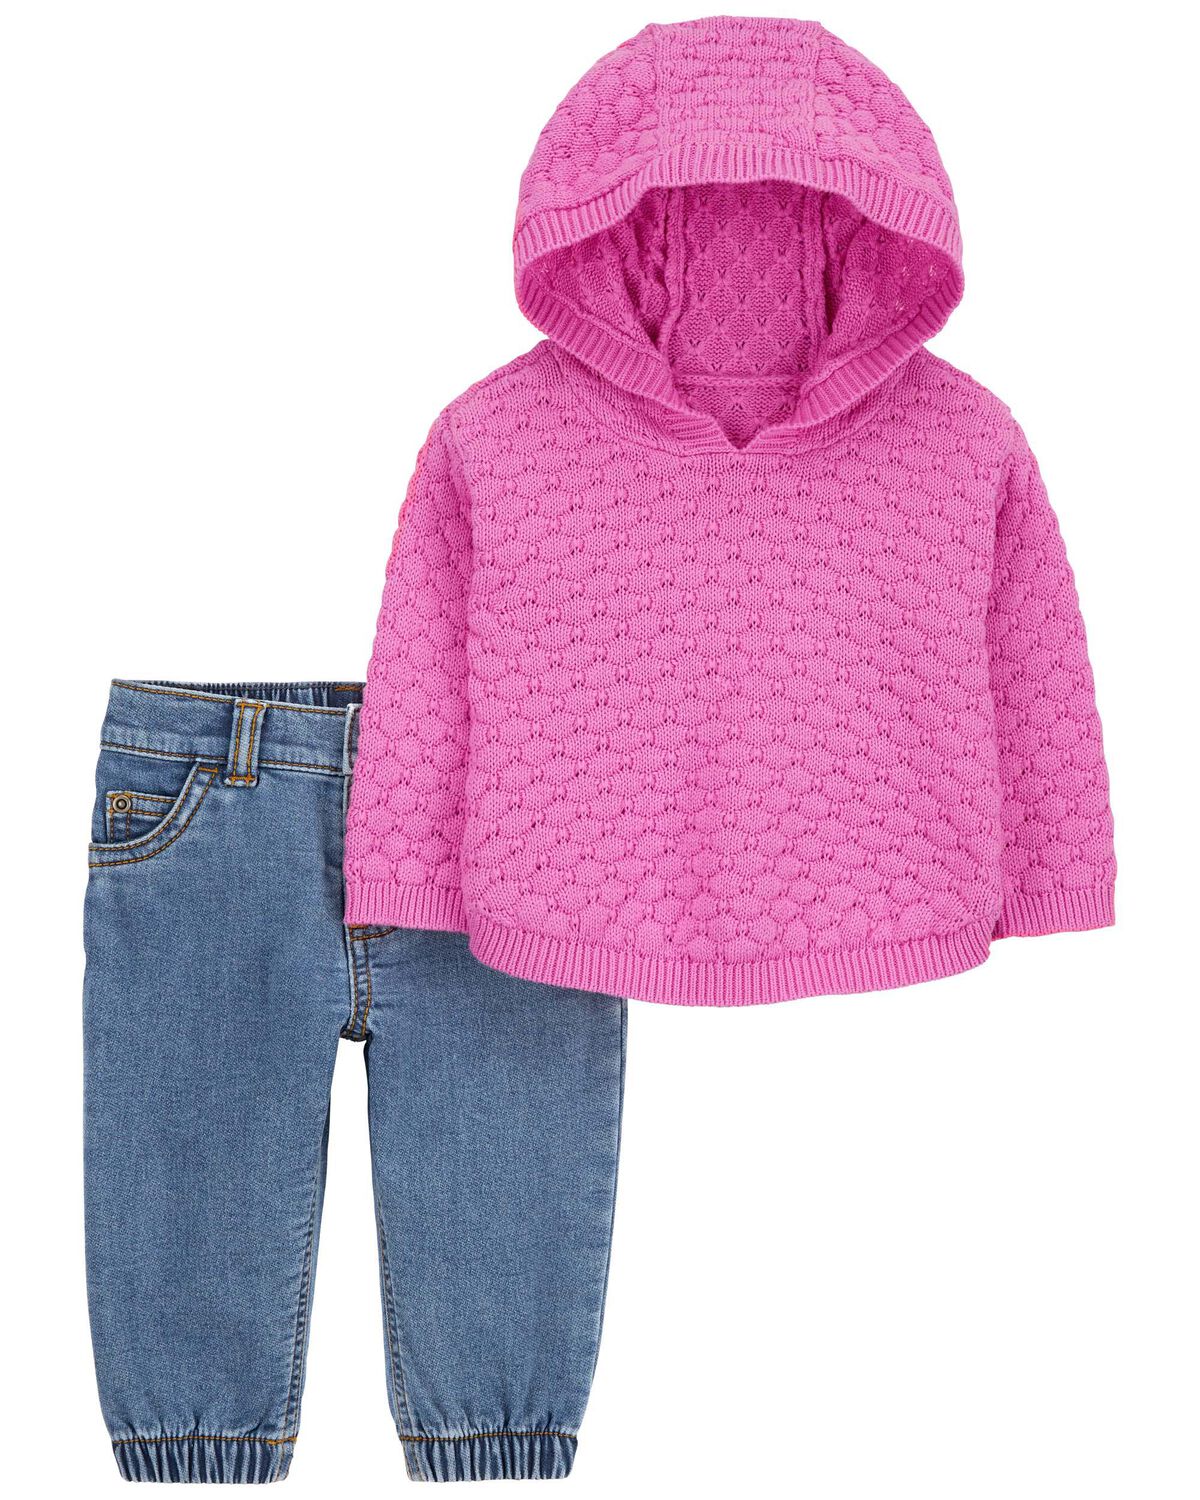 Baby Hooded Sweater & Denim Jeans Set